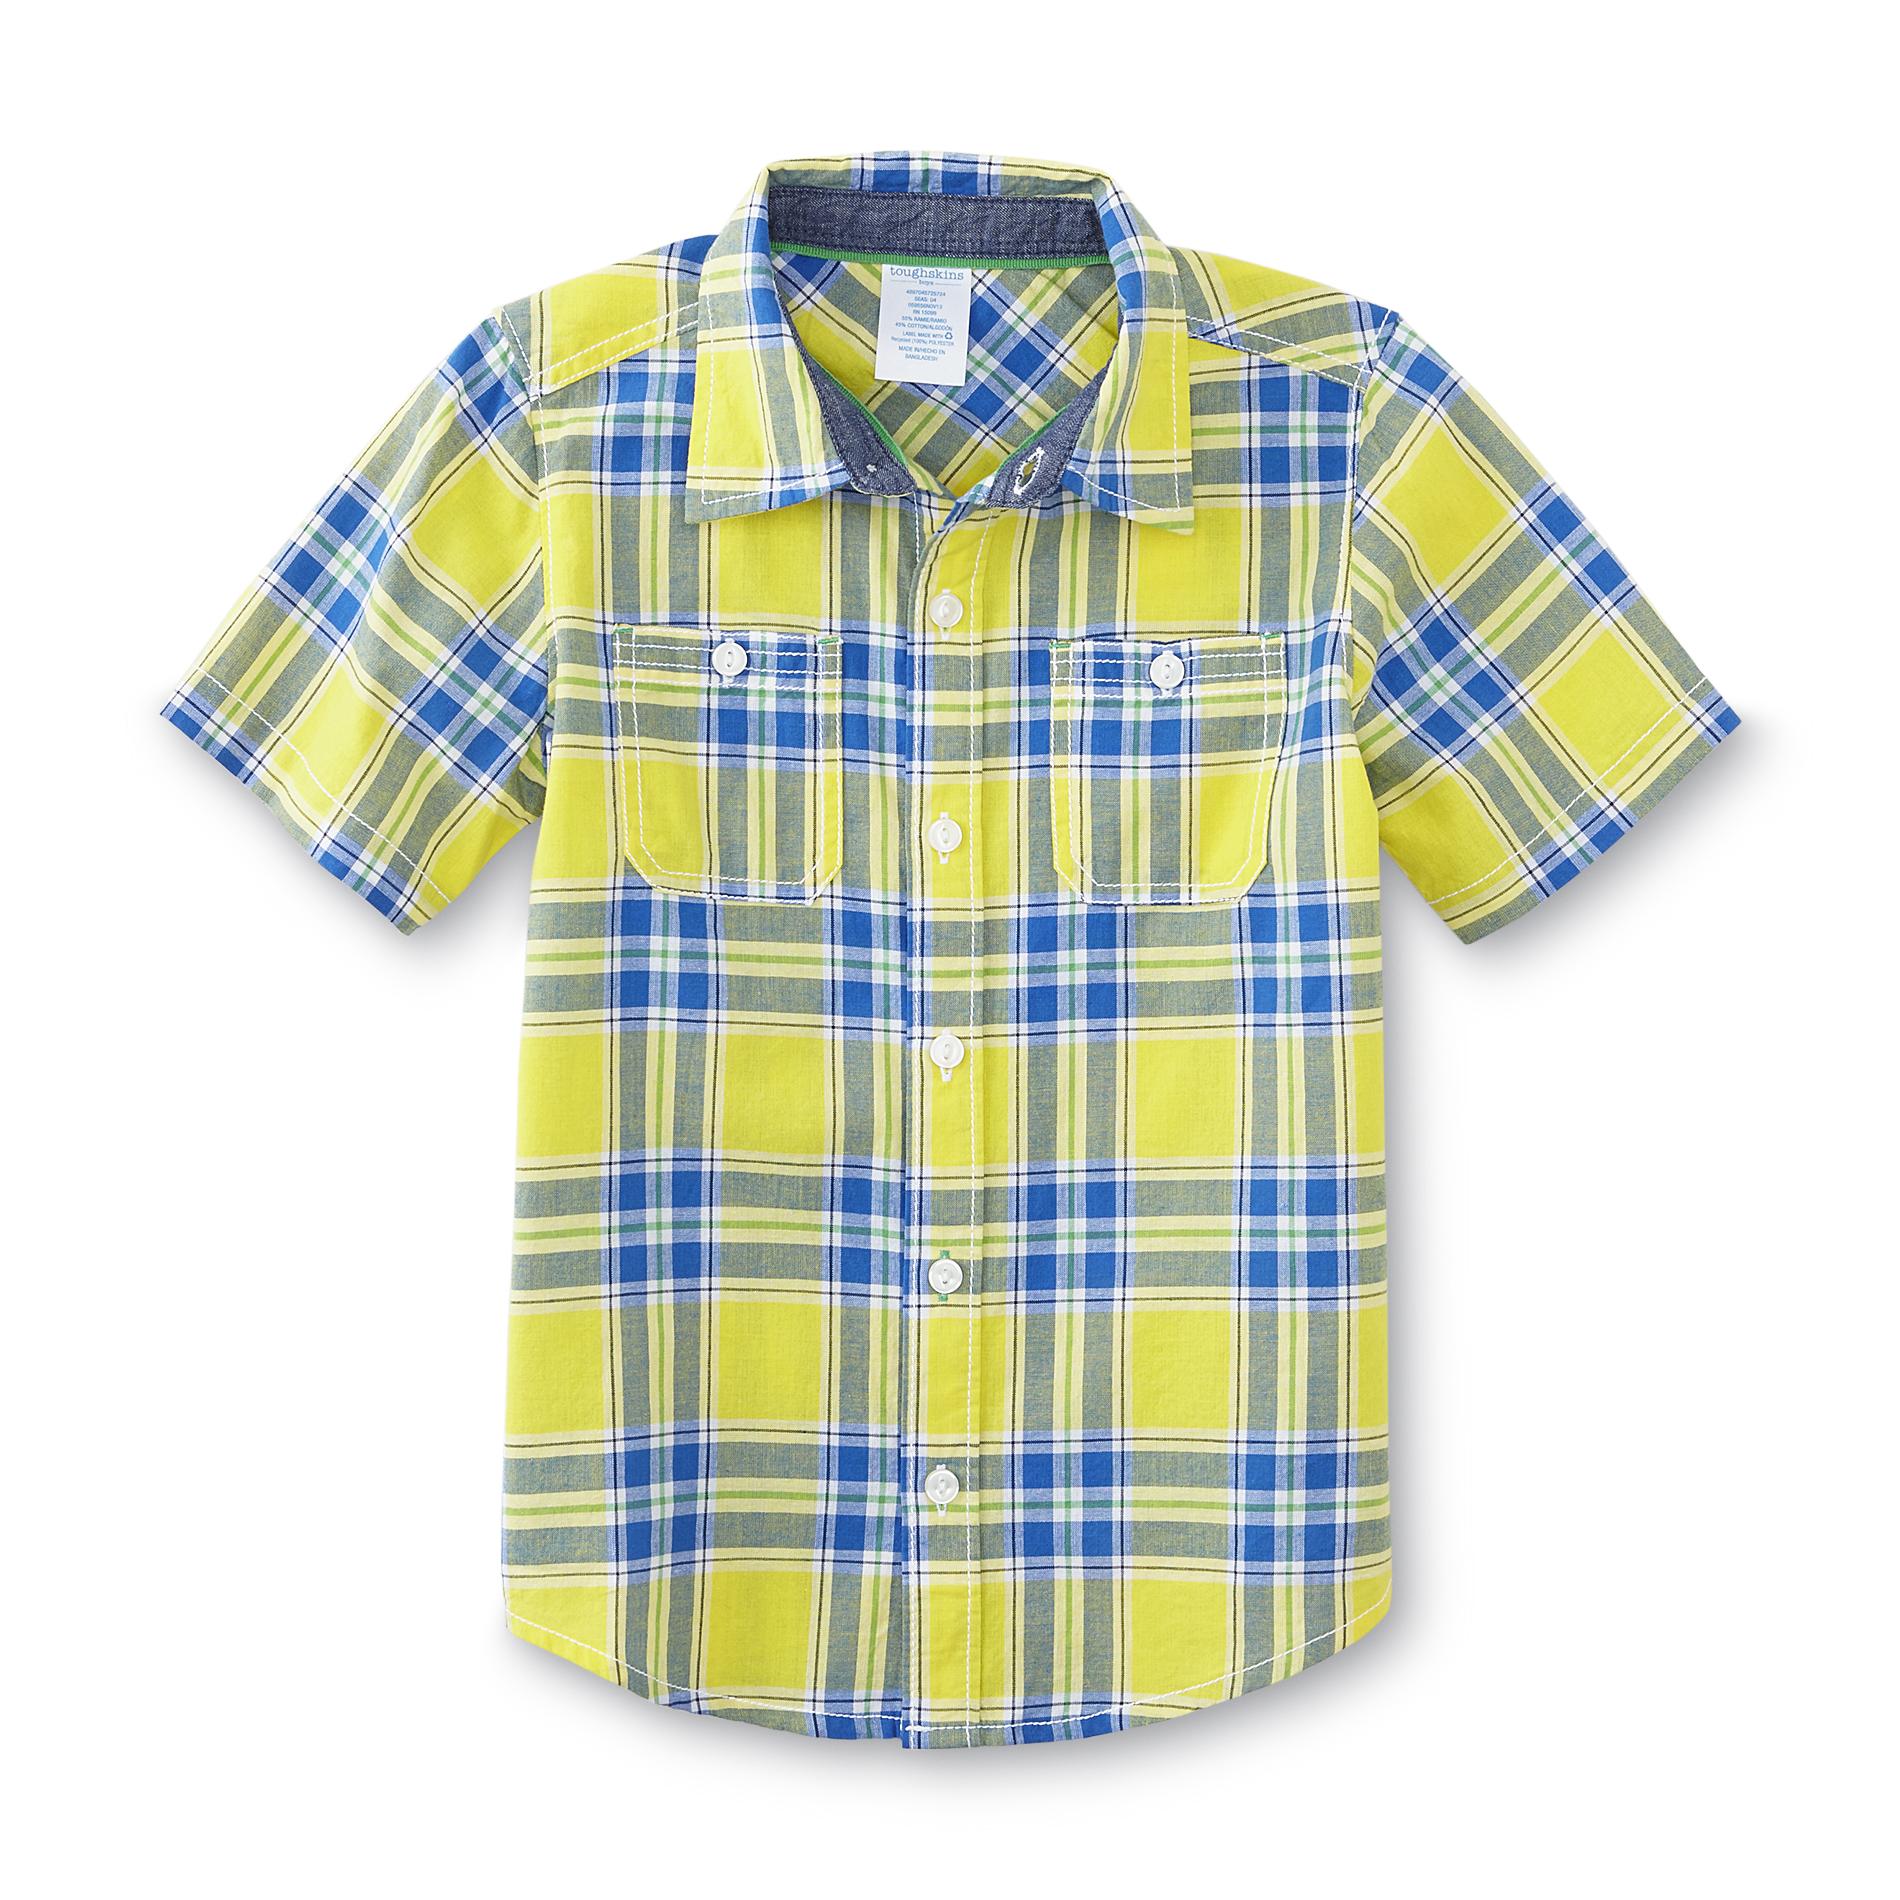 Toughskins Boy's Button-Front Shirt - Plaid